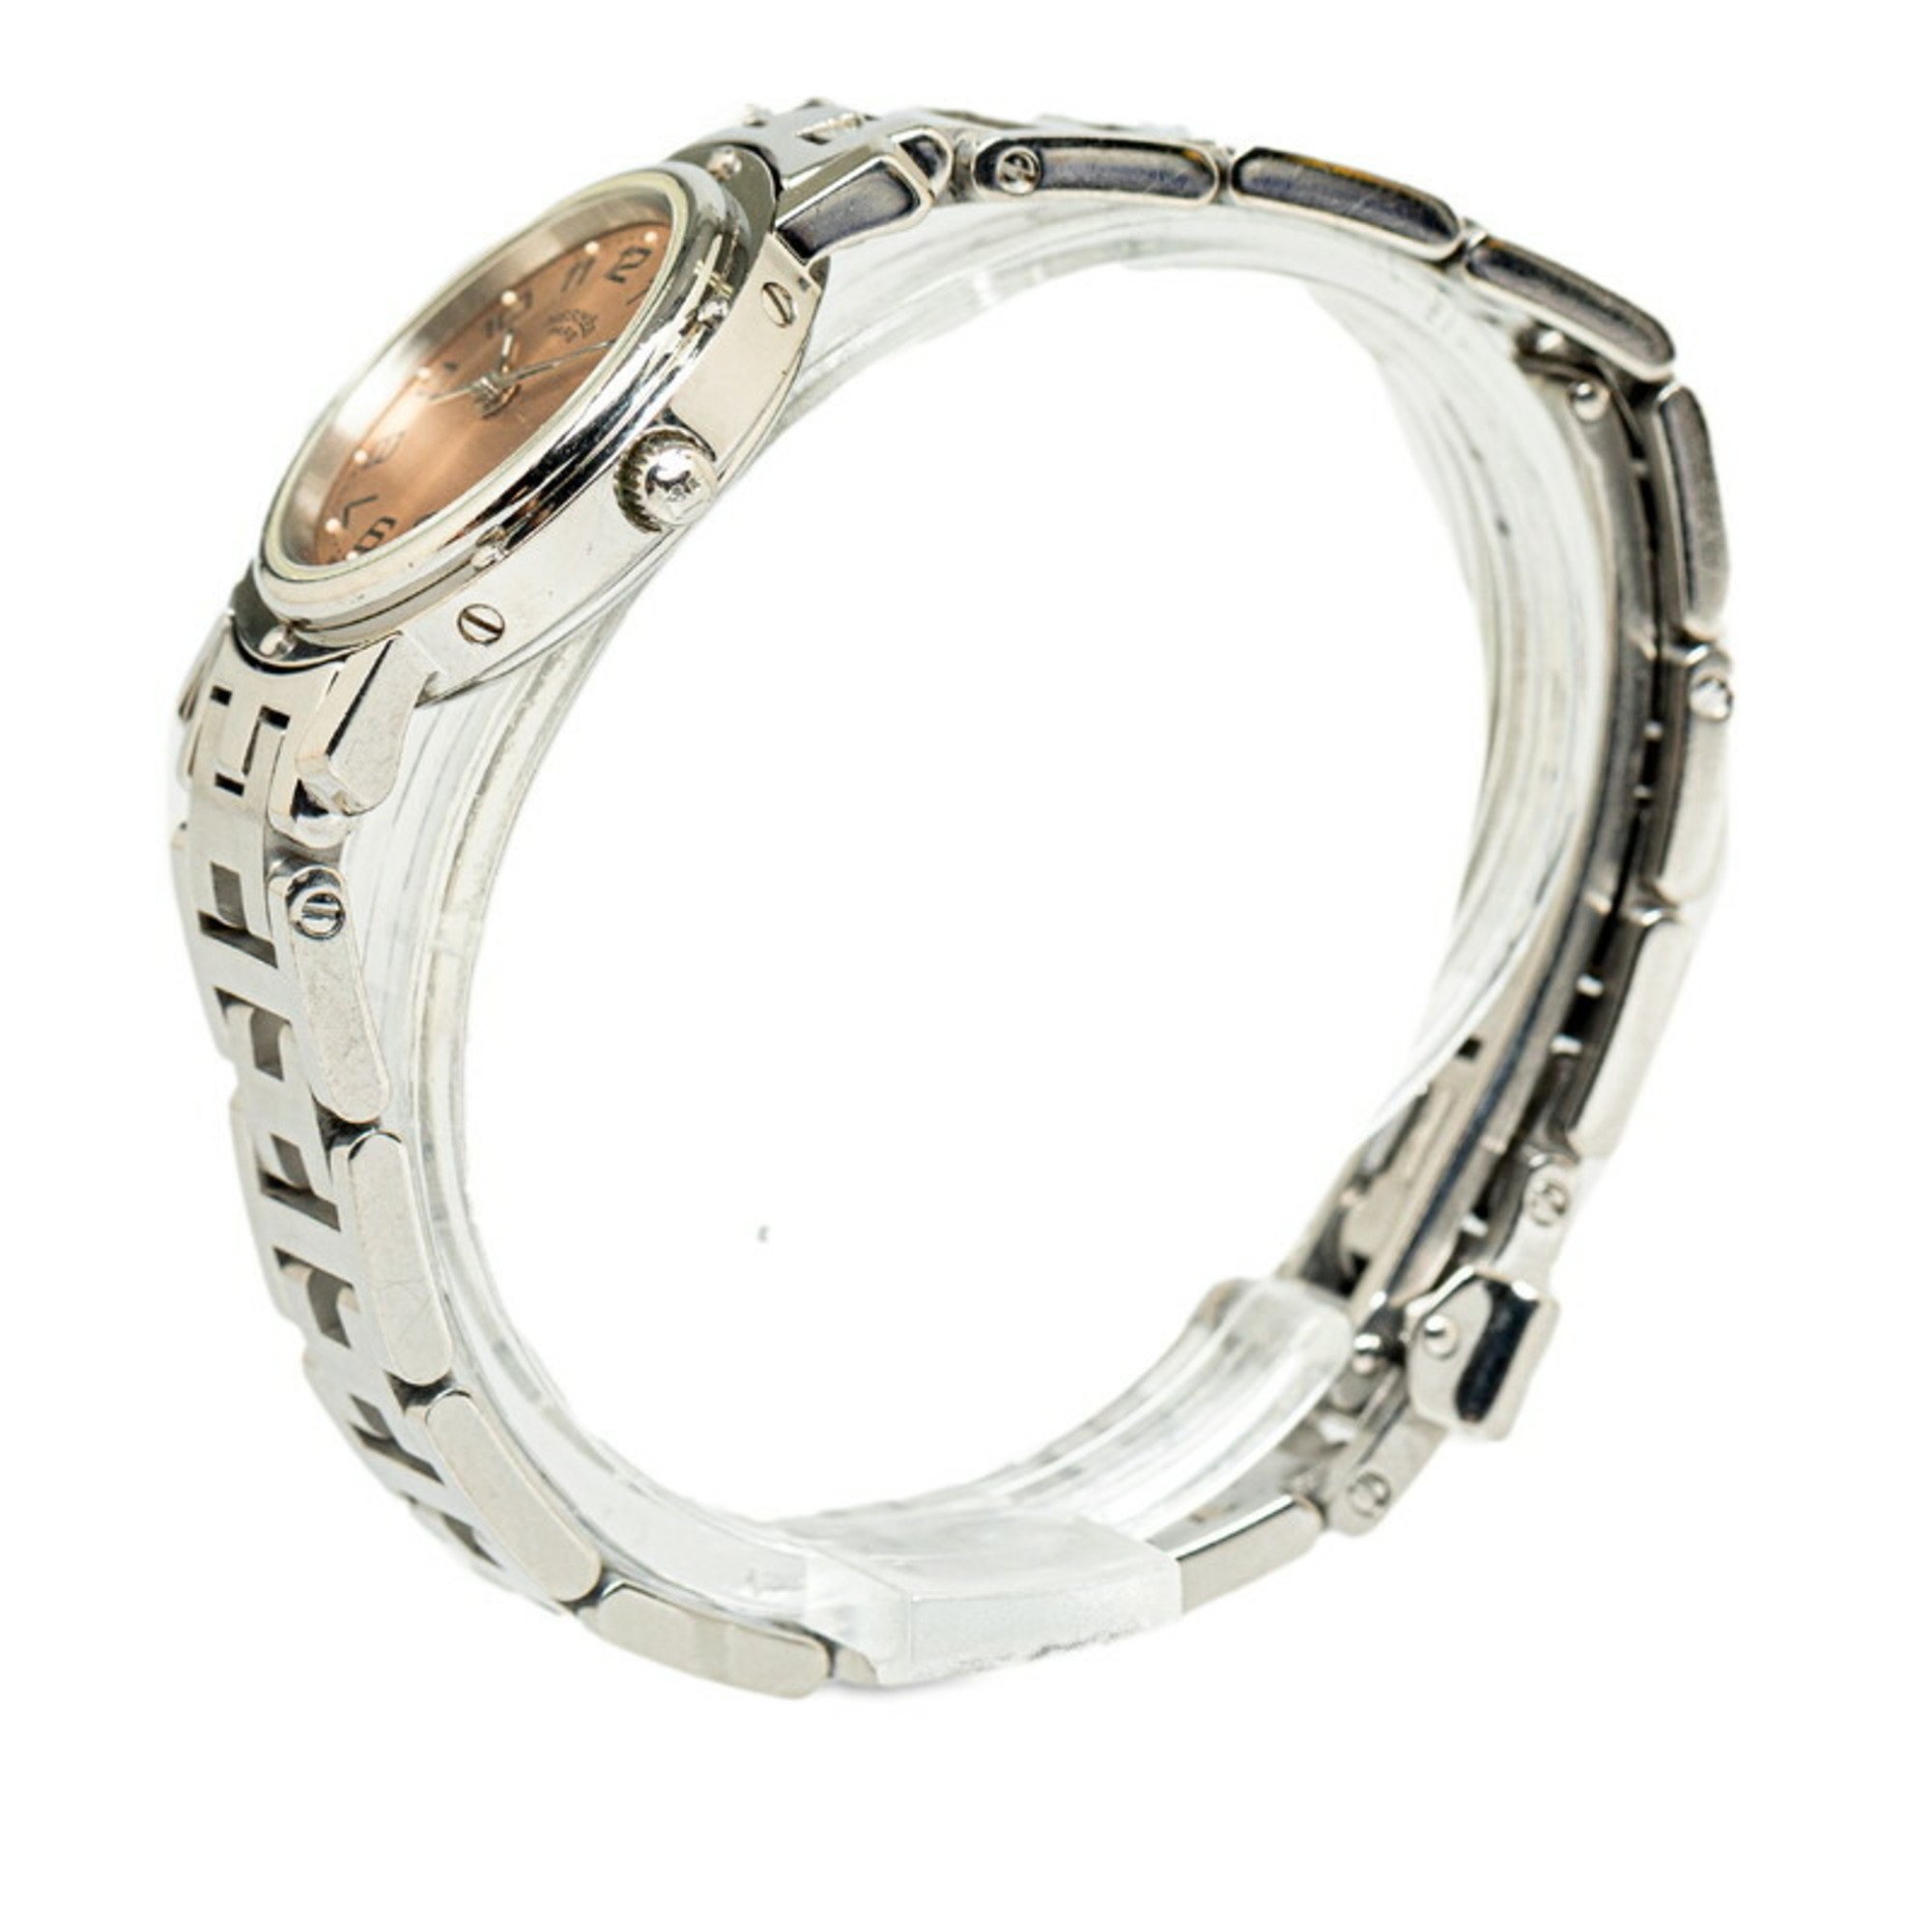 Hermes Clipper Watch CL4.210 Quartz Pink Dial Stainless Steel Women's HERMES